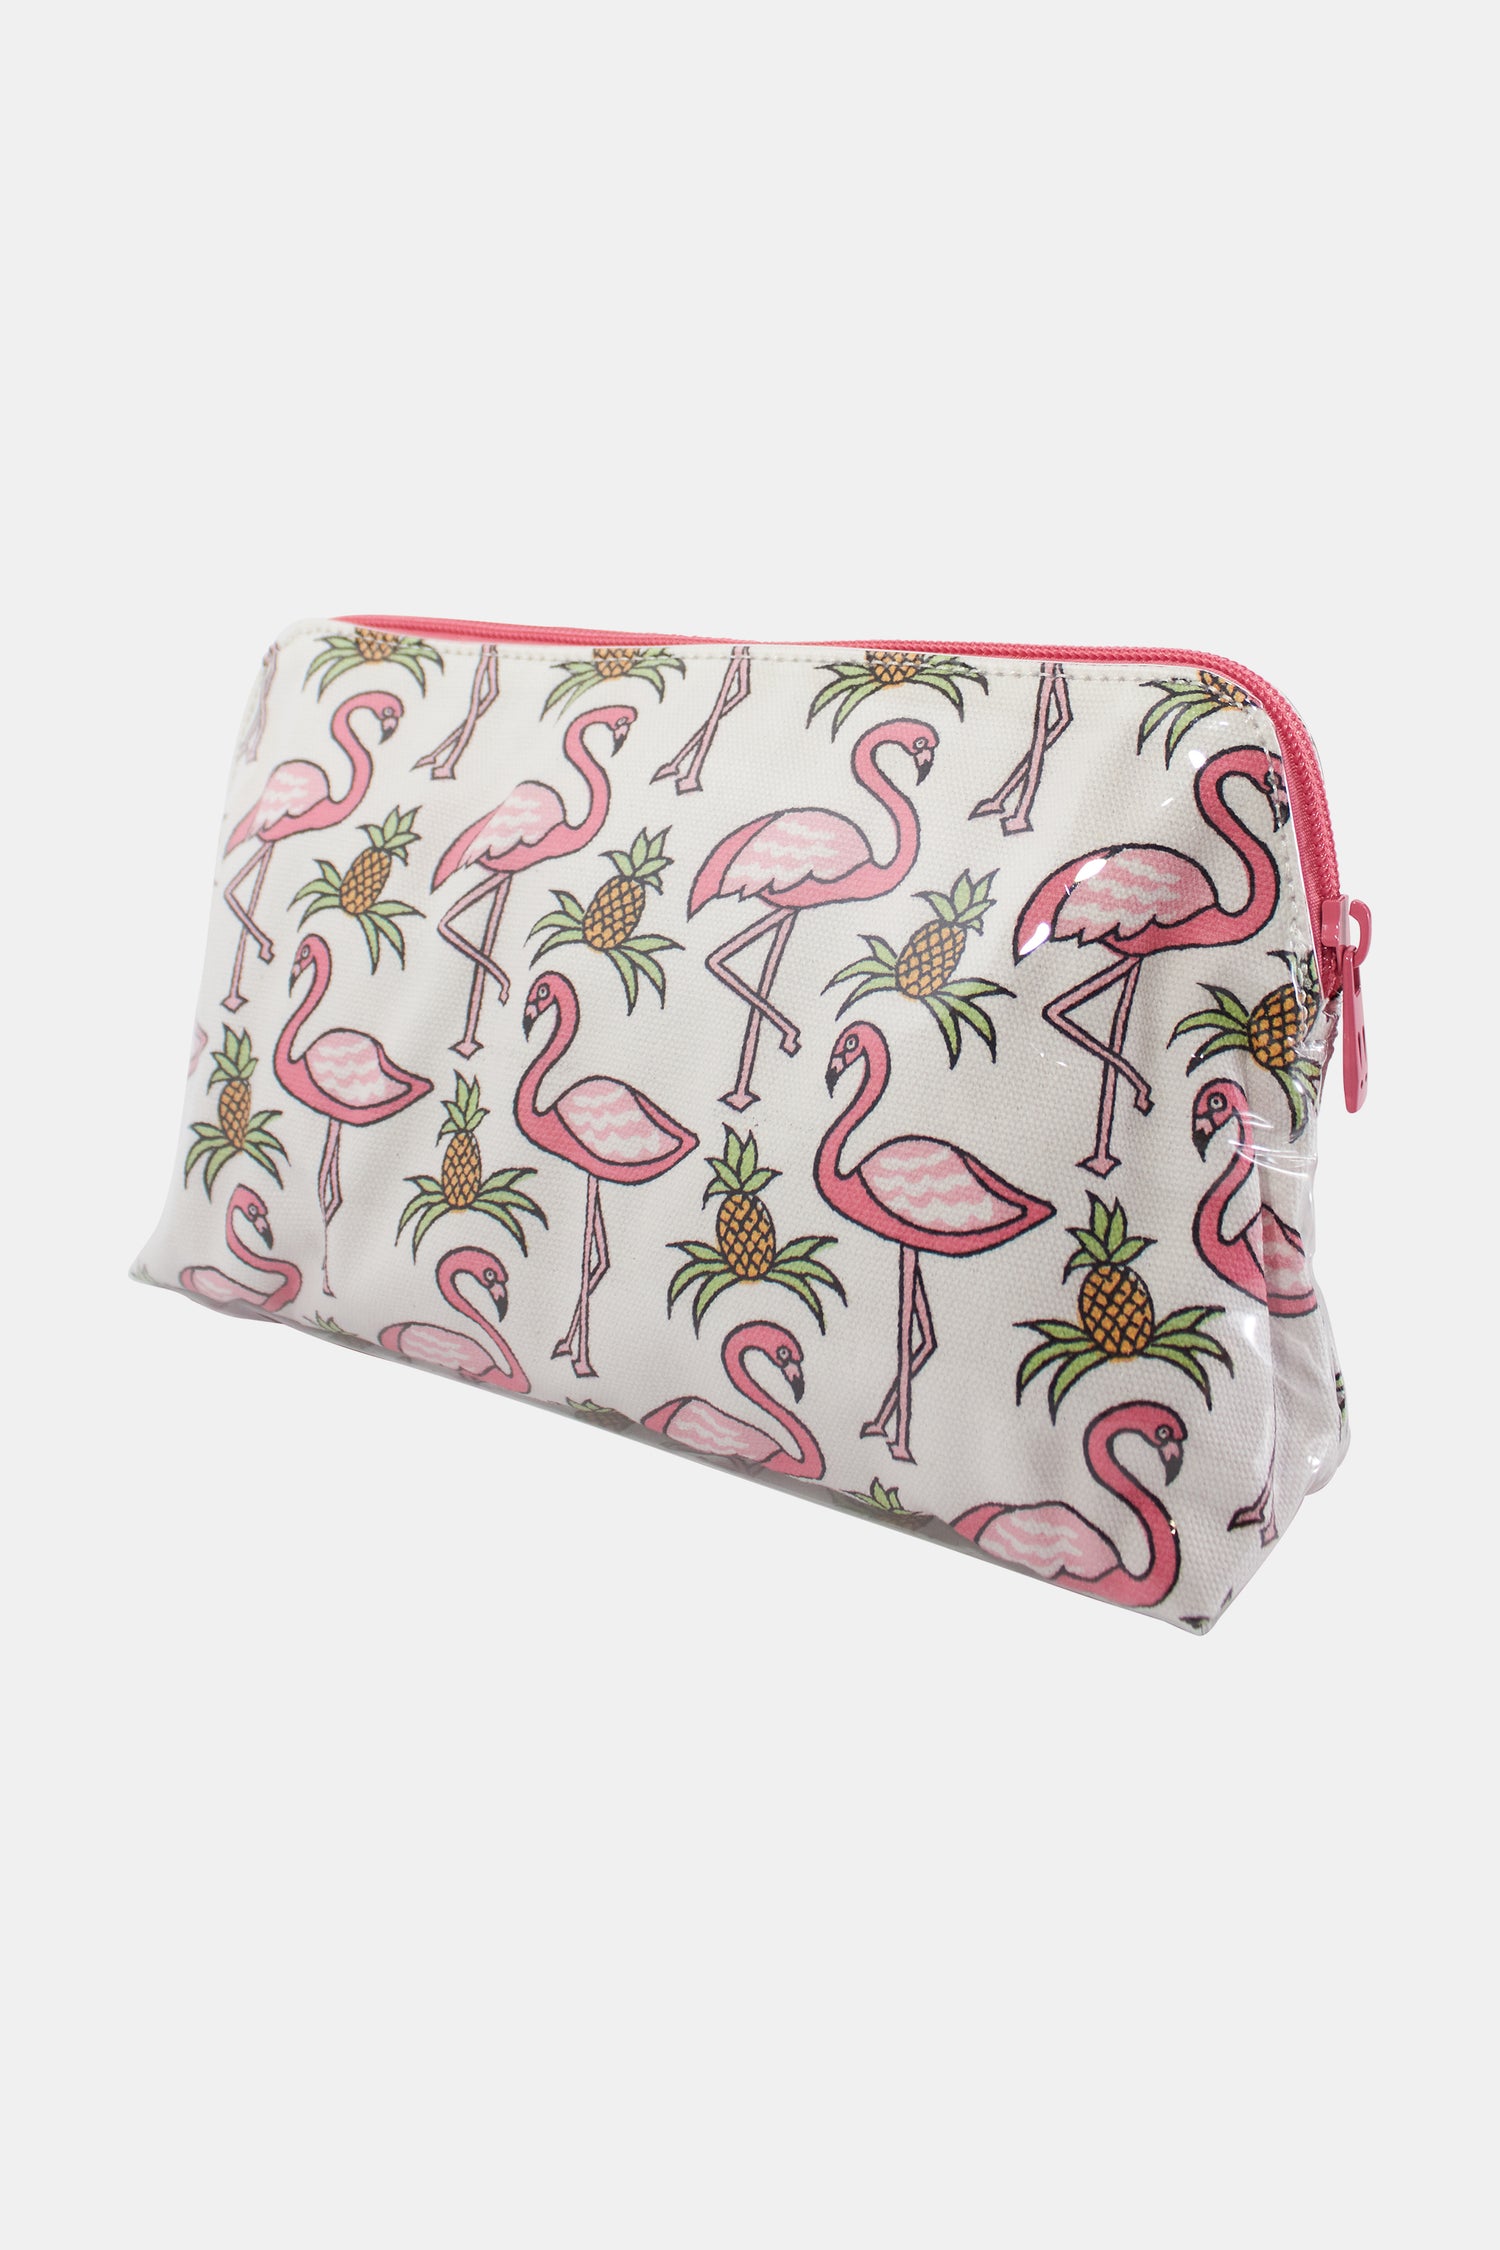 Roller Rabbit Freddy Flamingo Makeup Bag